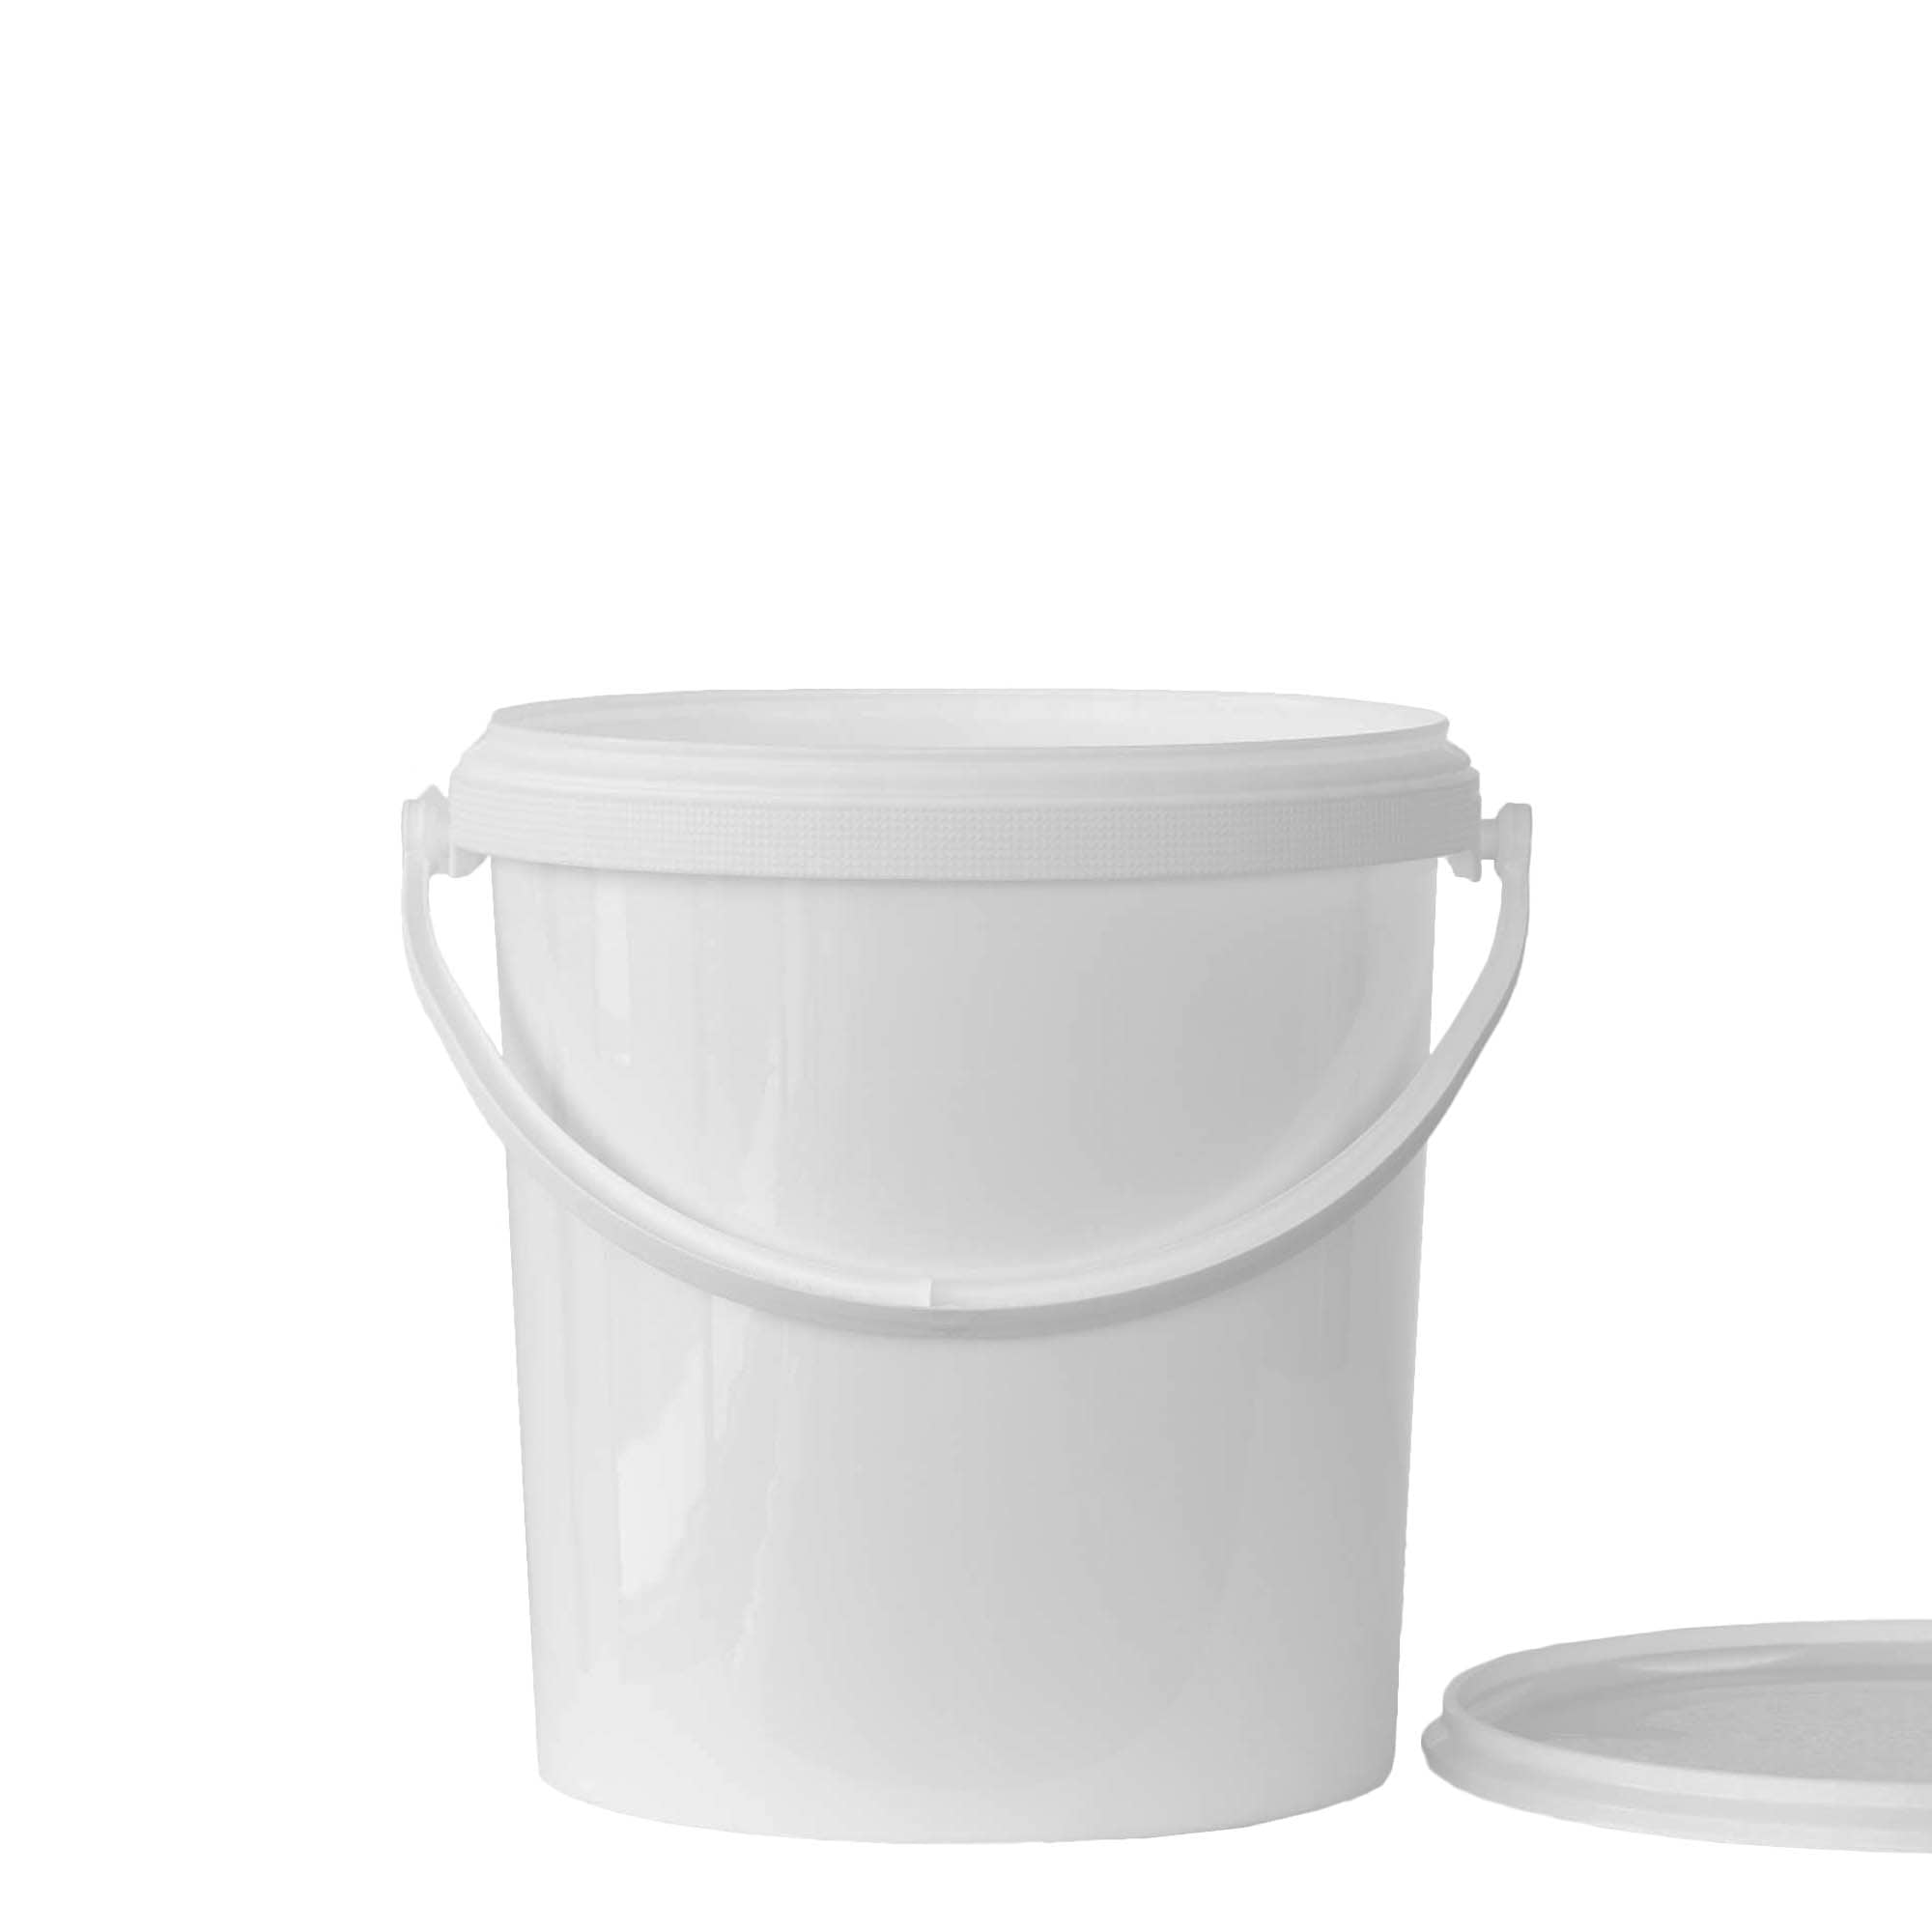 6 l bucket, PP plastic, white